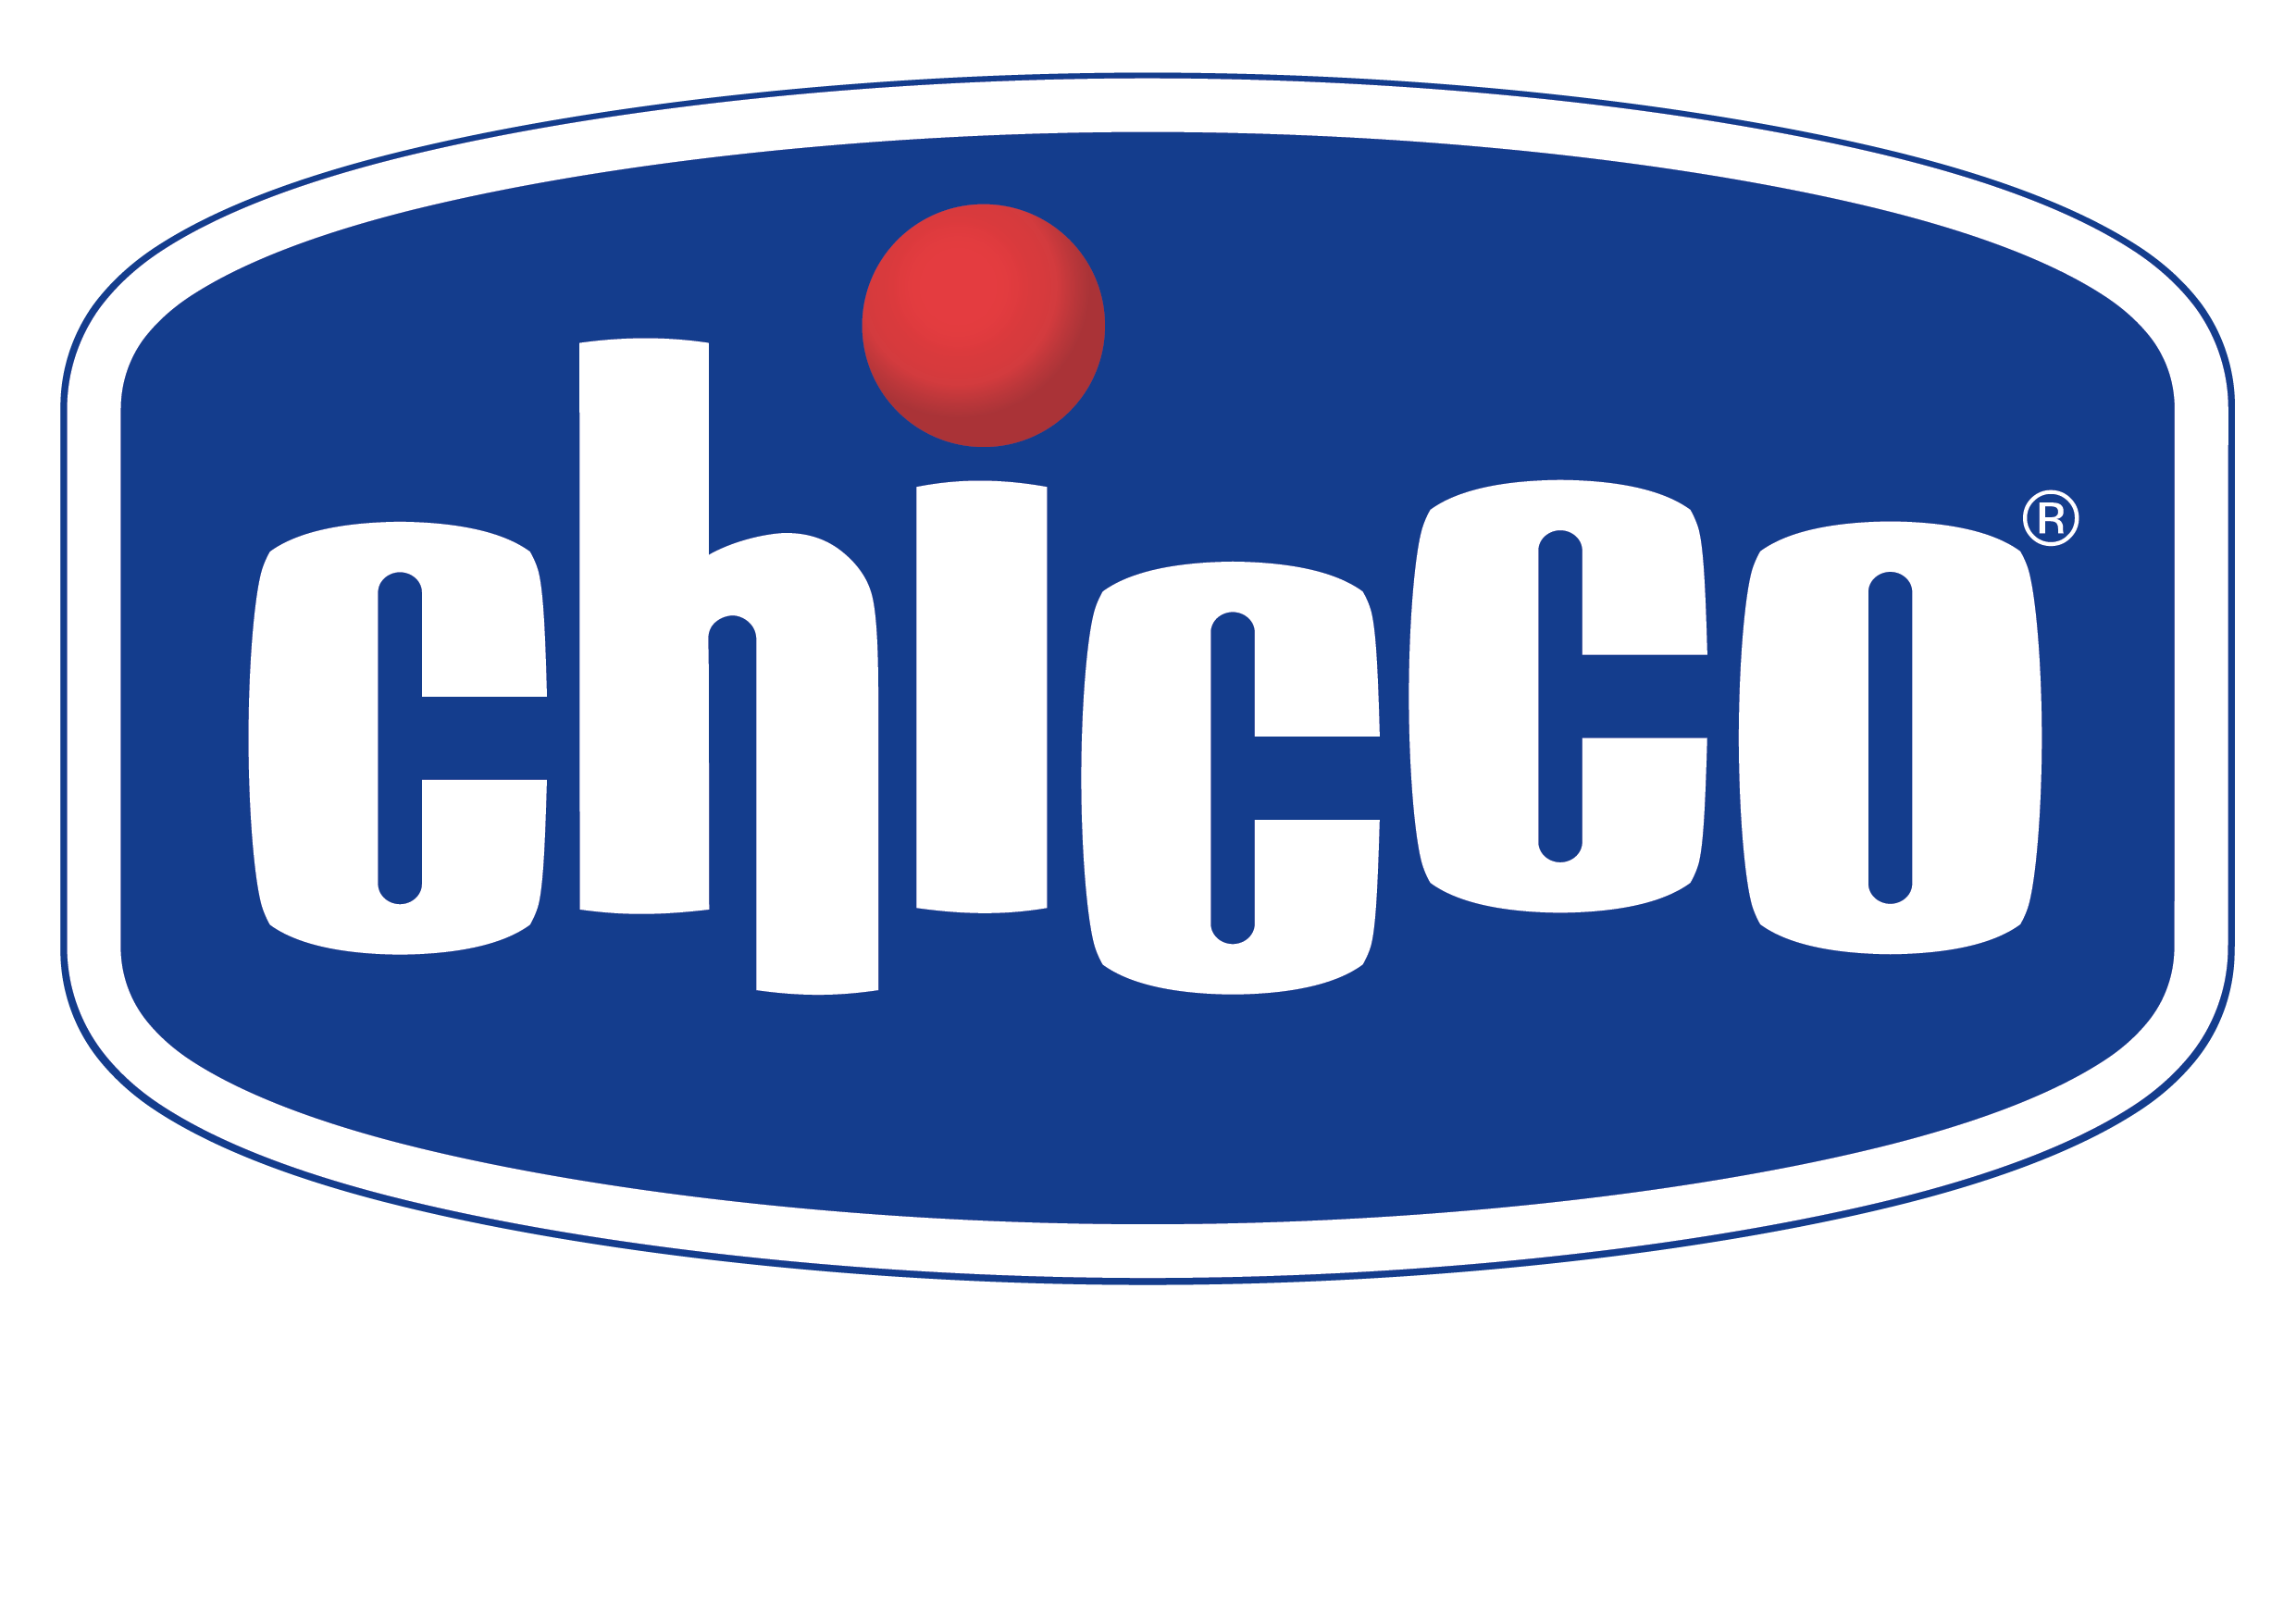 Logo chicco outline